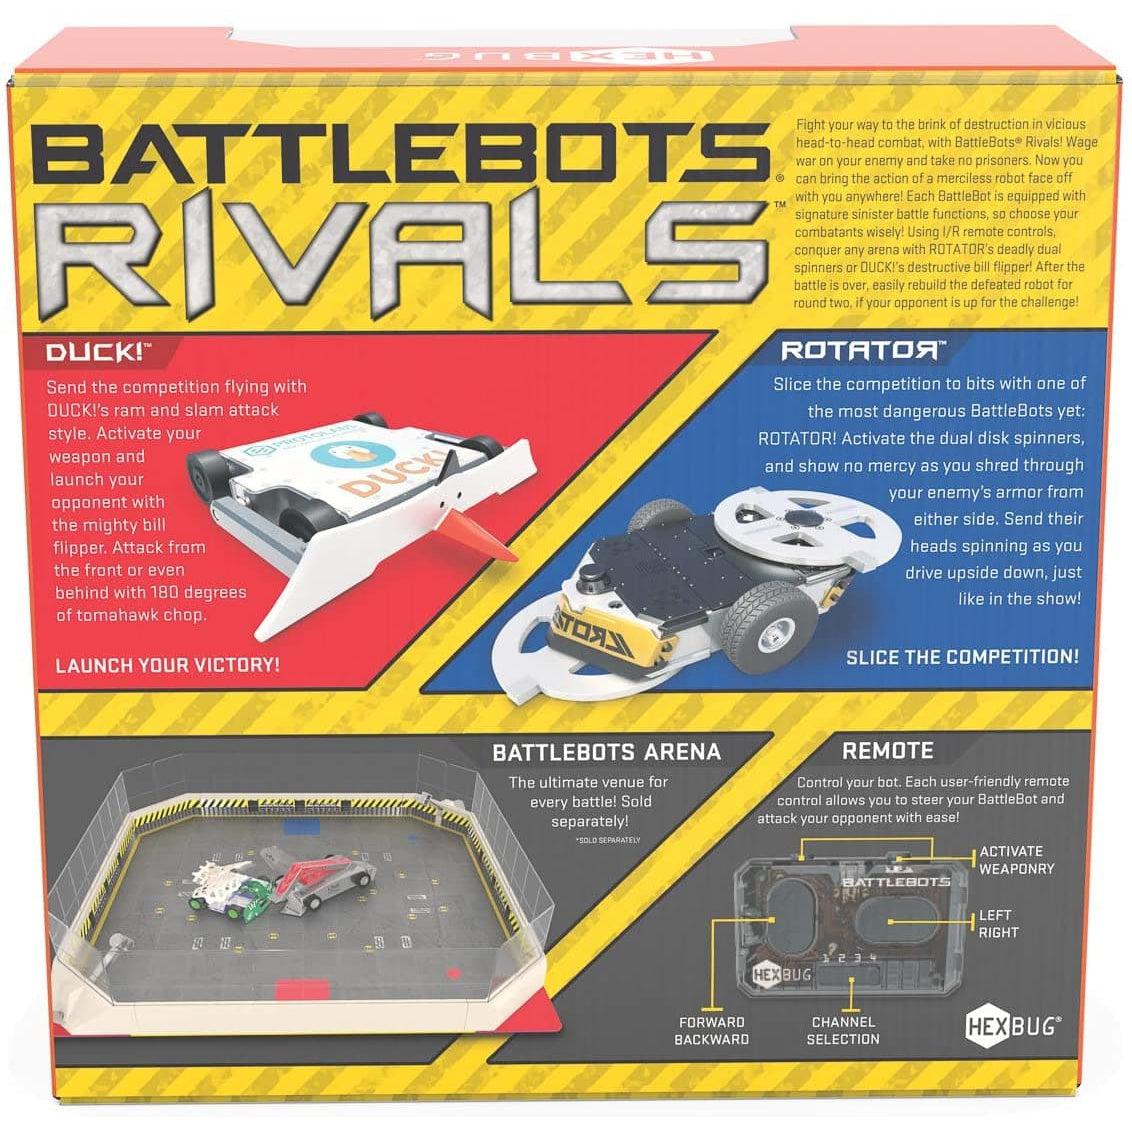 Spin Master-Hexbug Battlebots Rivals V5 - Duck vs. Rotator-6069028-Legacy Toys